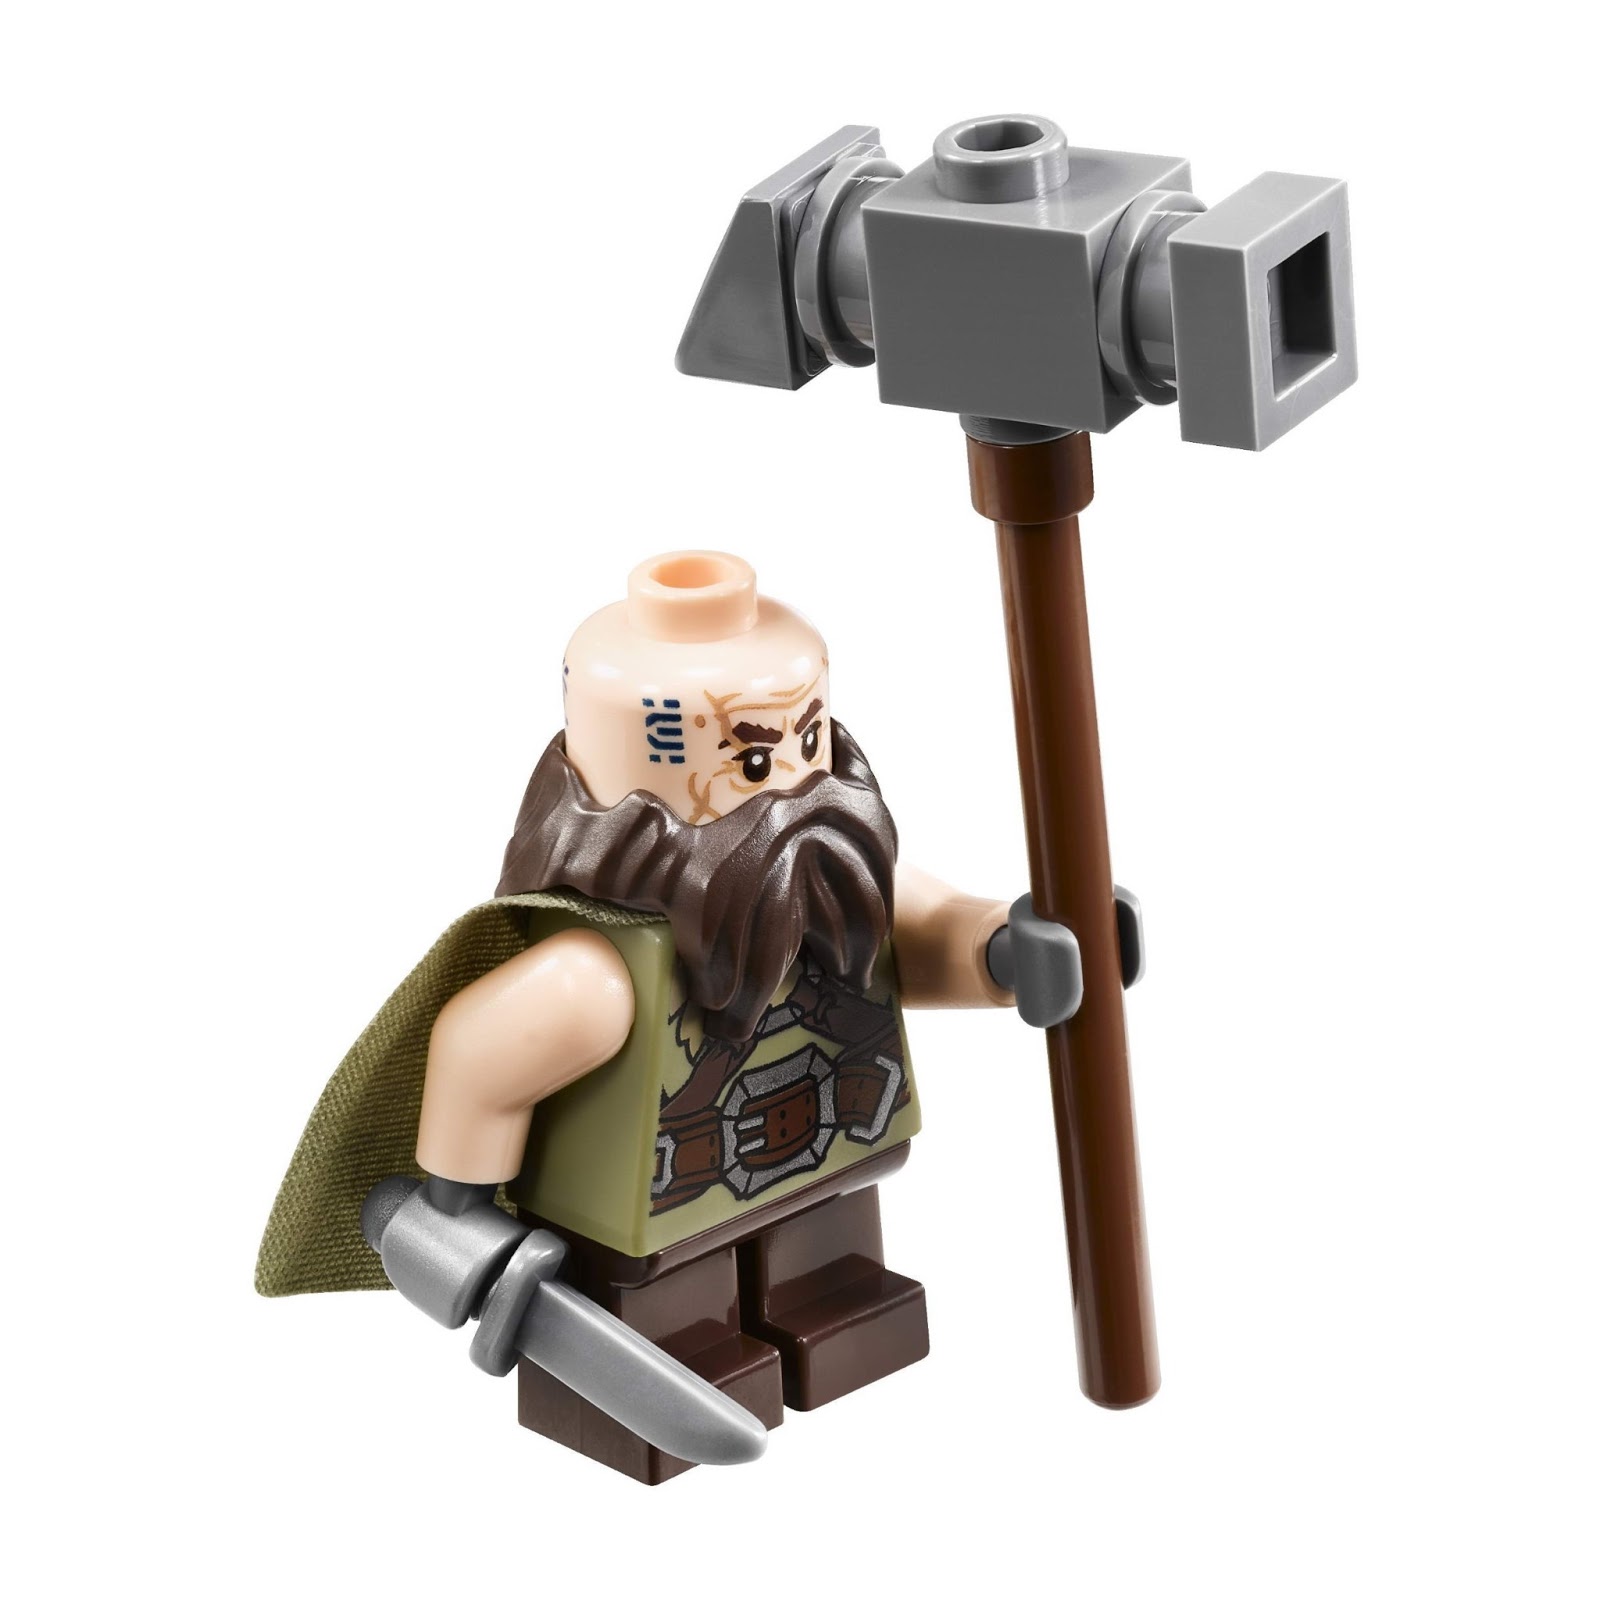 LEGO Hobbit 79003